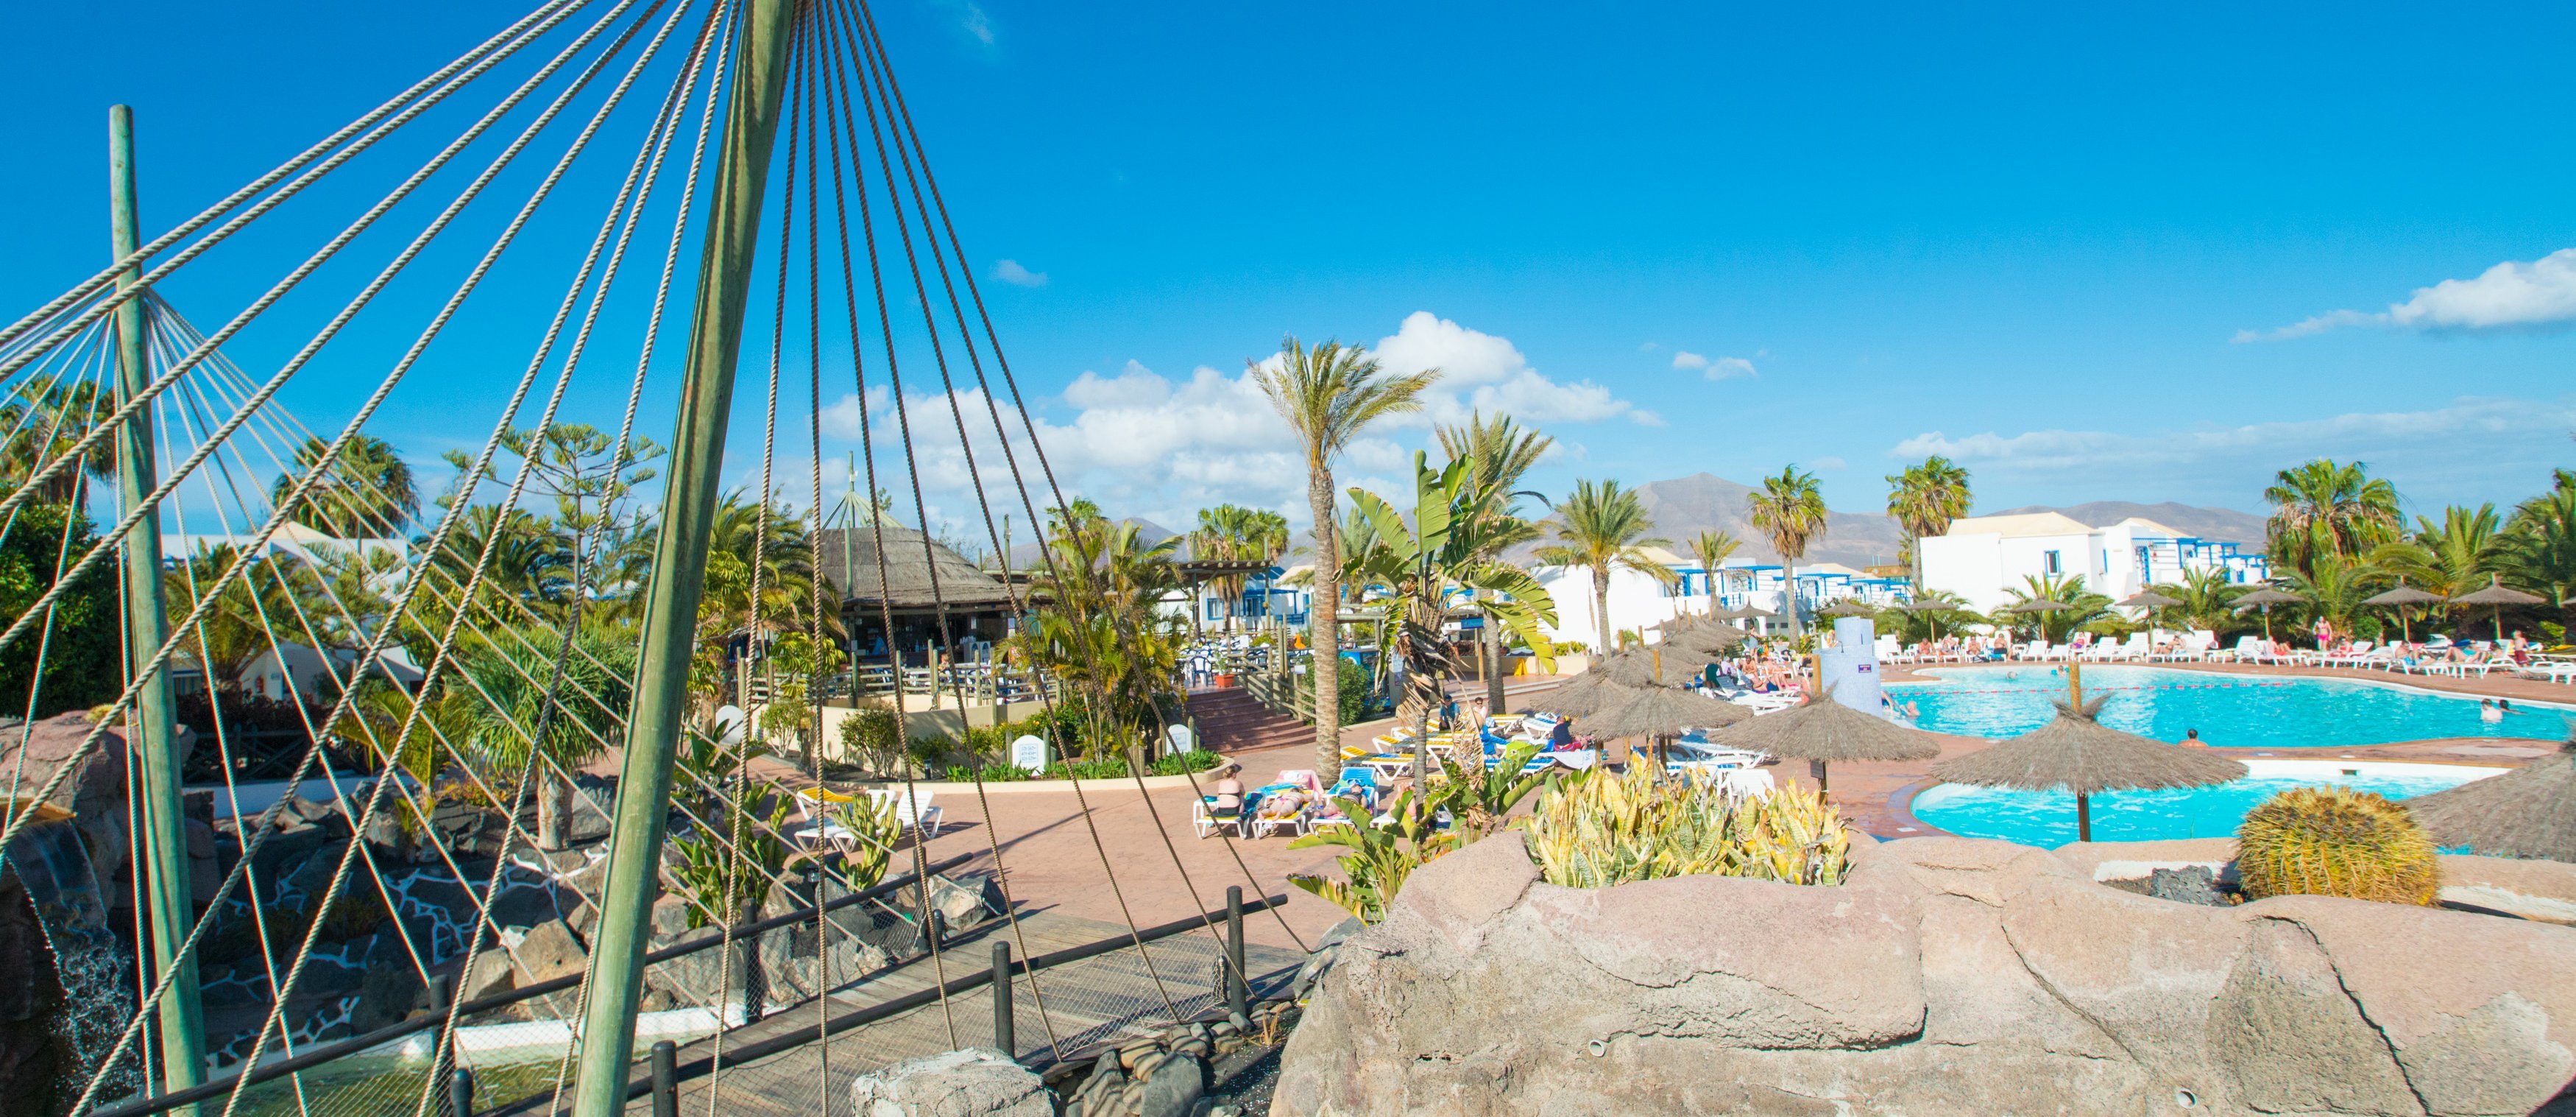 Hotel HL Paradise Island**** - Lanzarote - HOTEL PARADISE